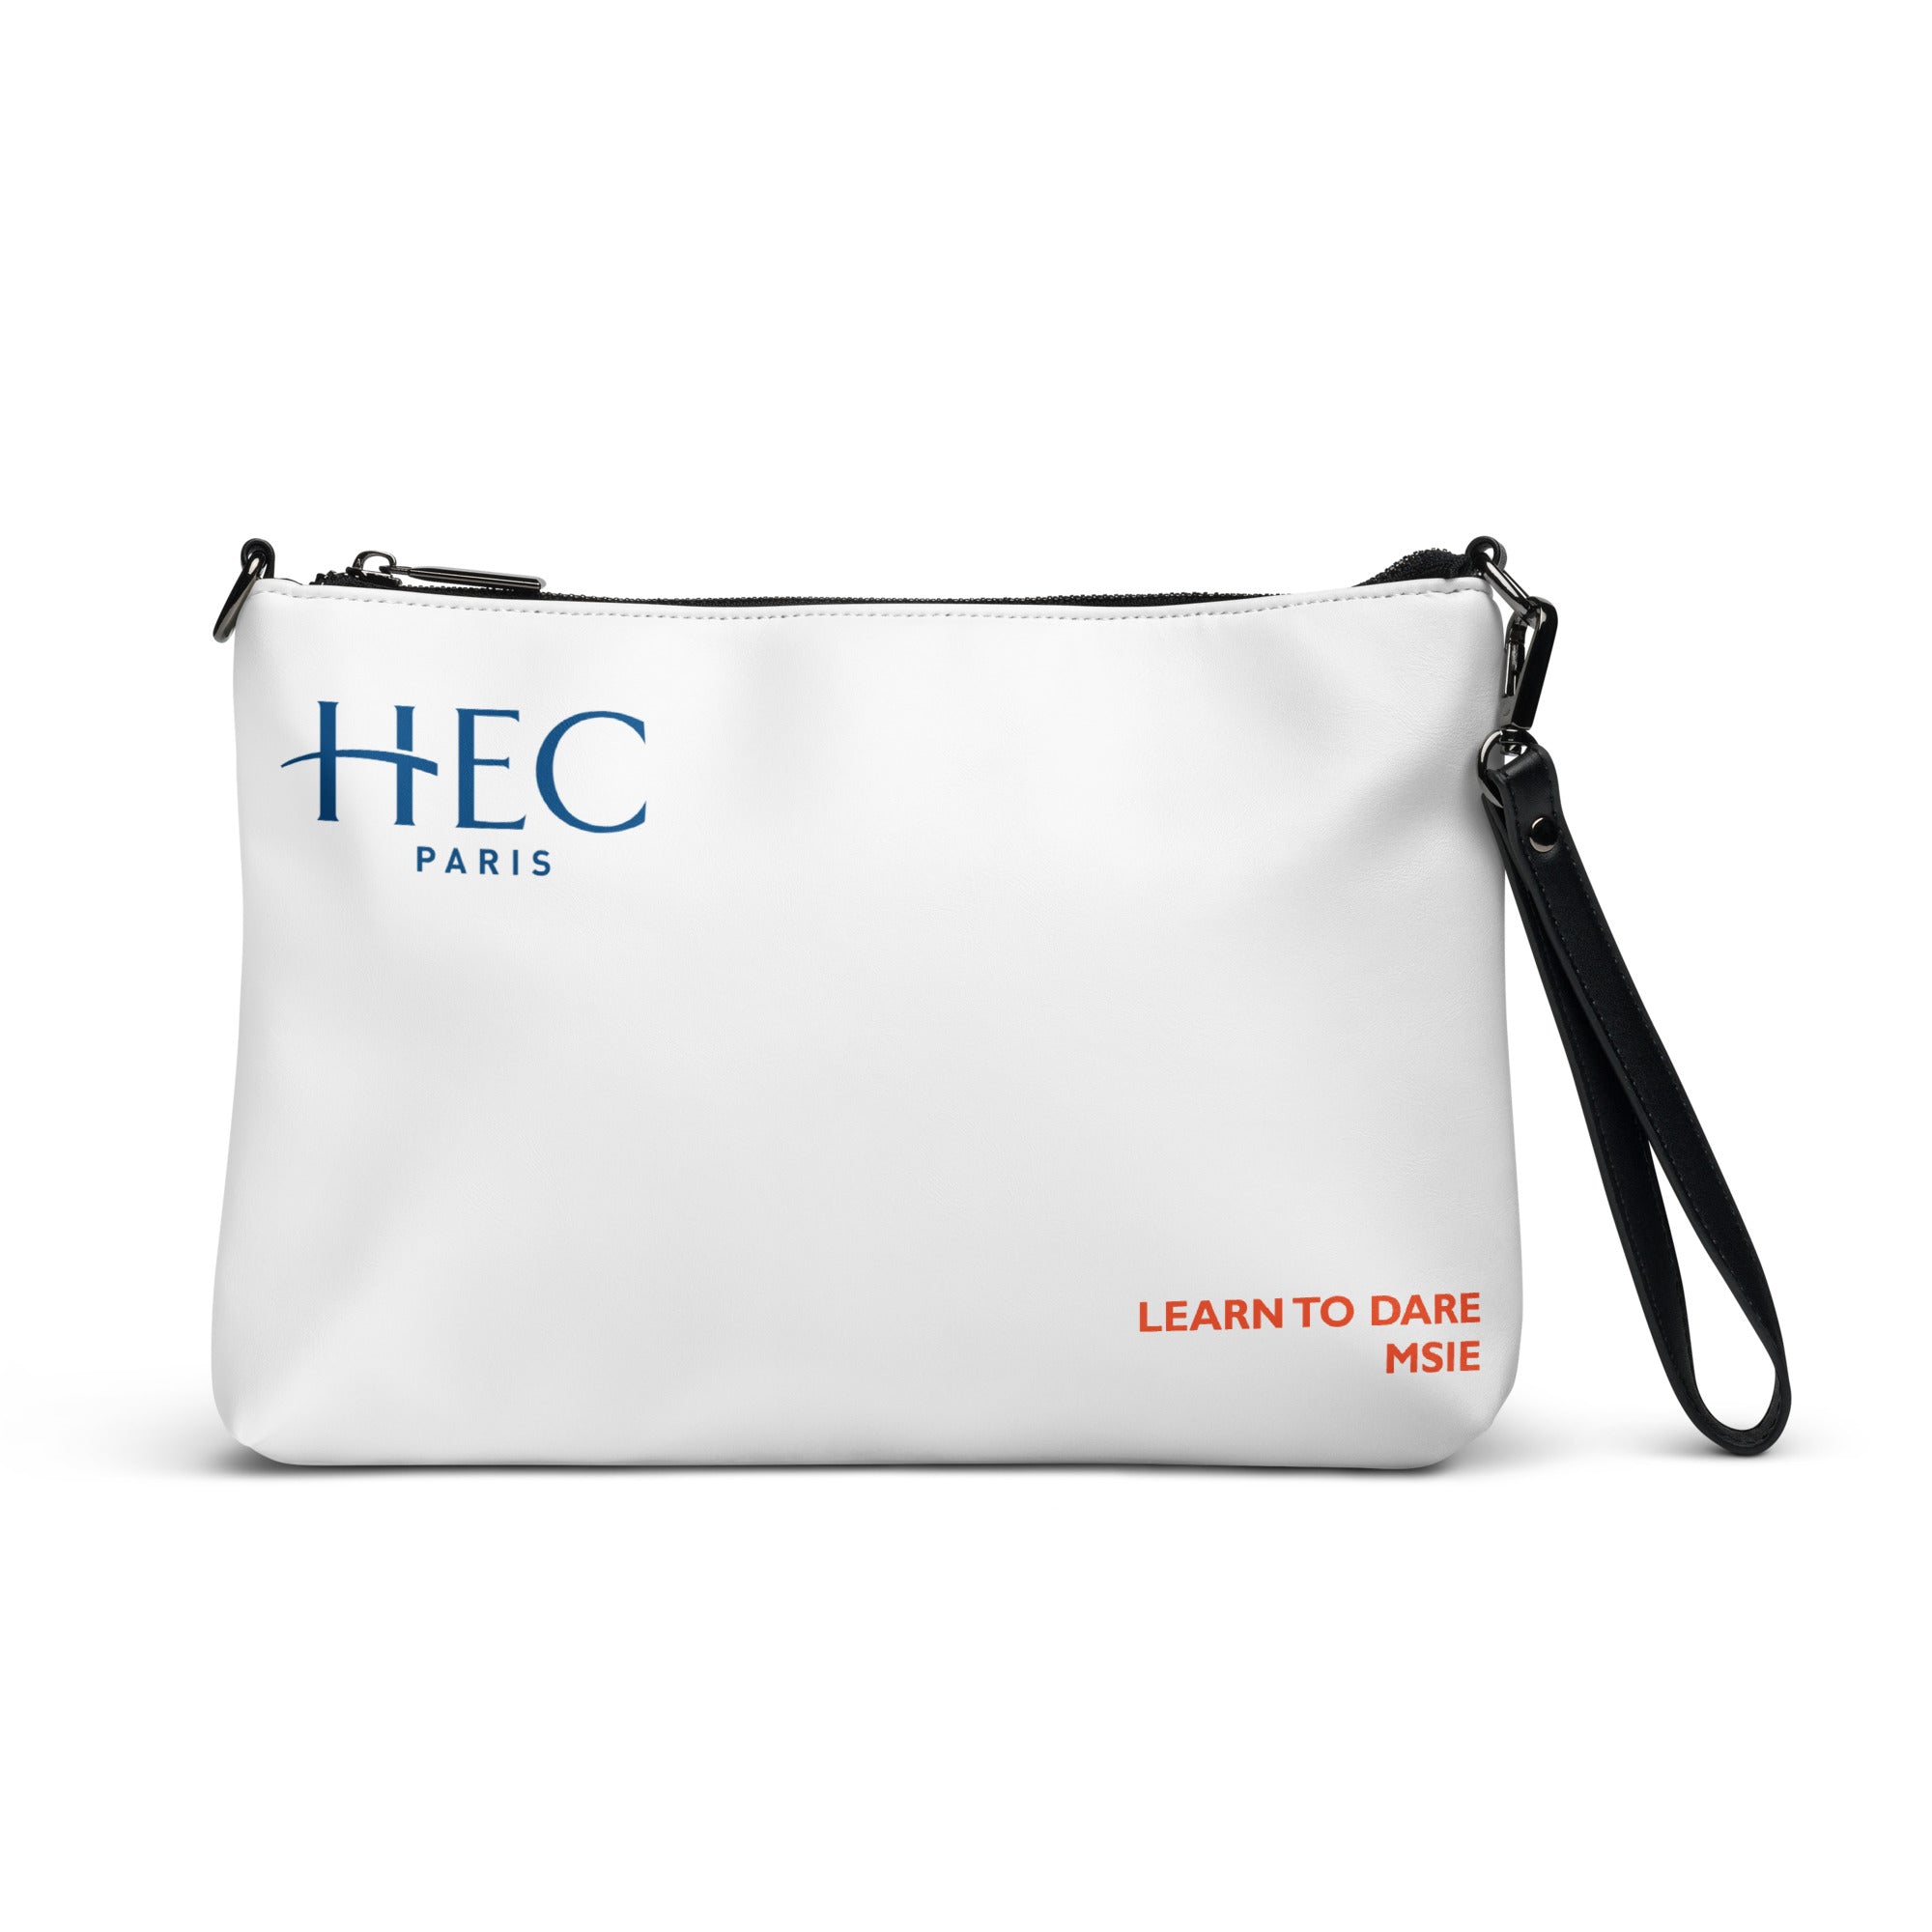 HEC Paris MSIE "LEARN TO DARE" Crossbody bag